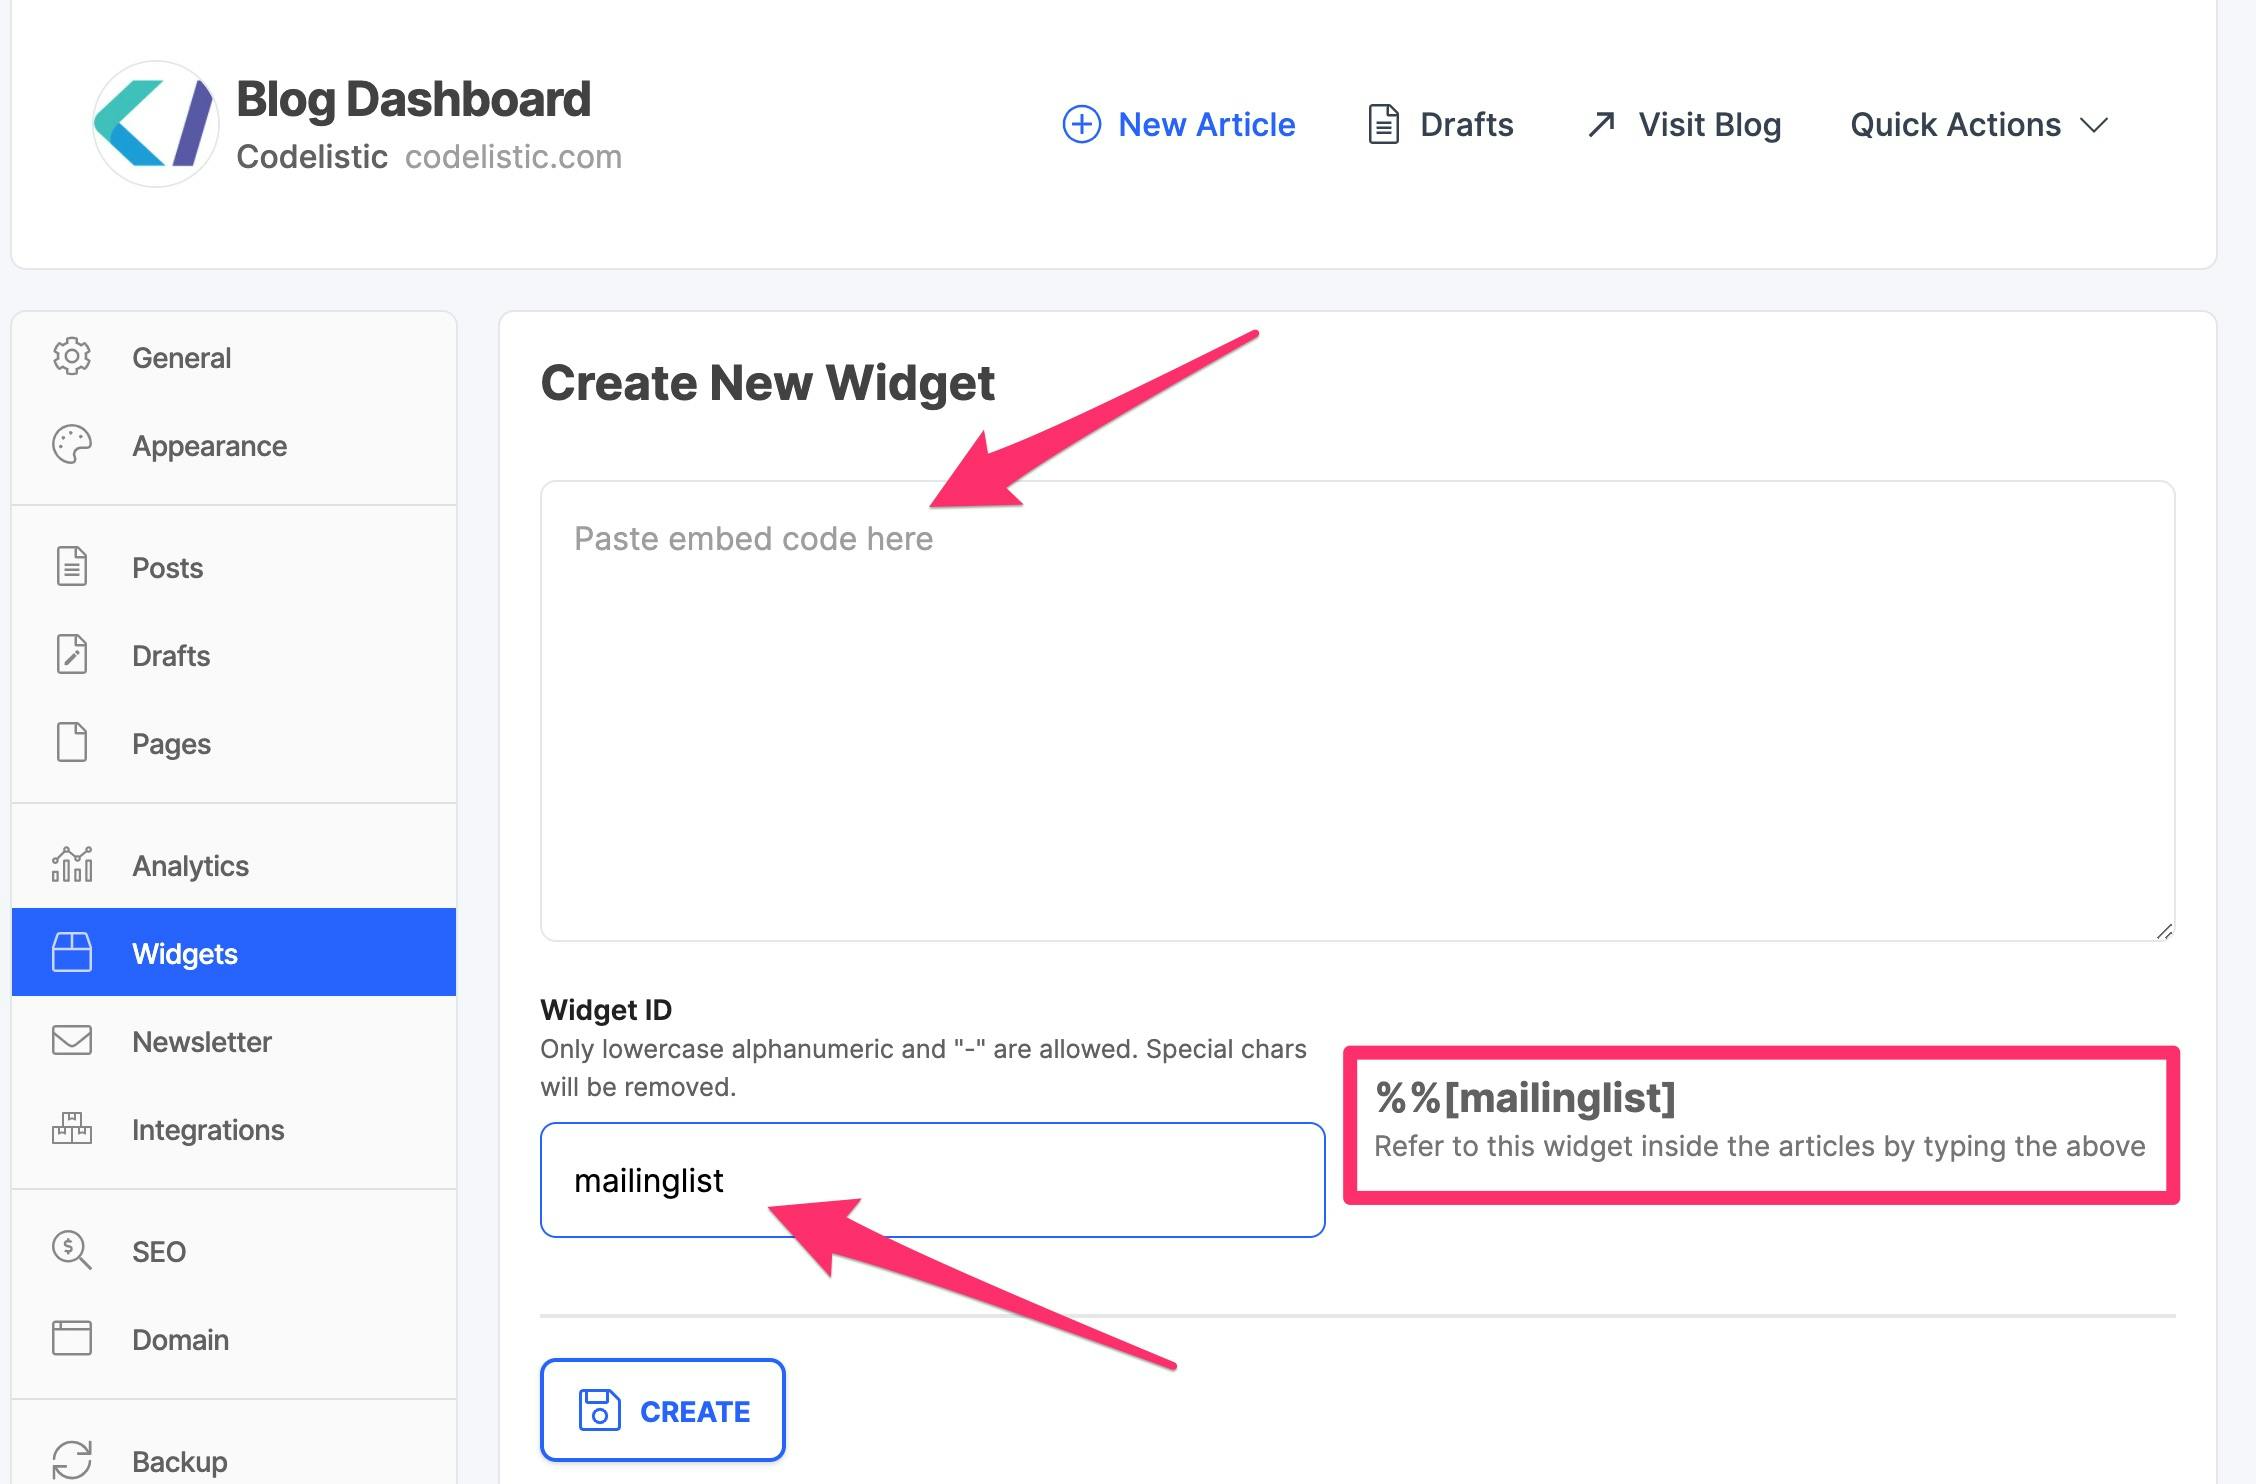 Hashnode Blog Dashboard with opened Create New Widget form